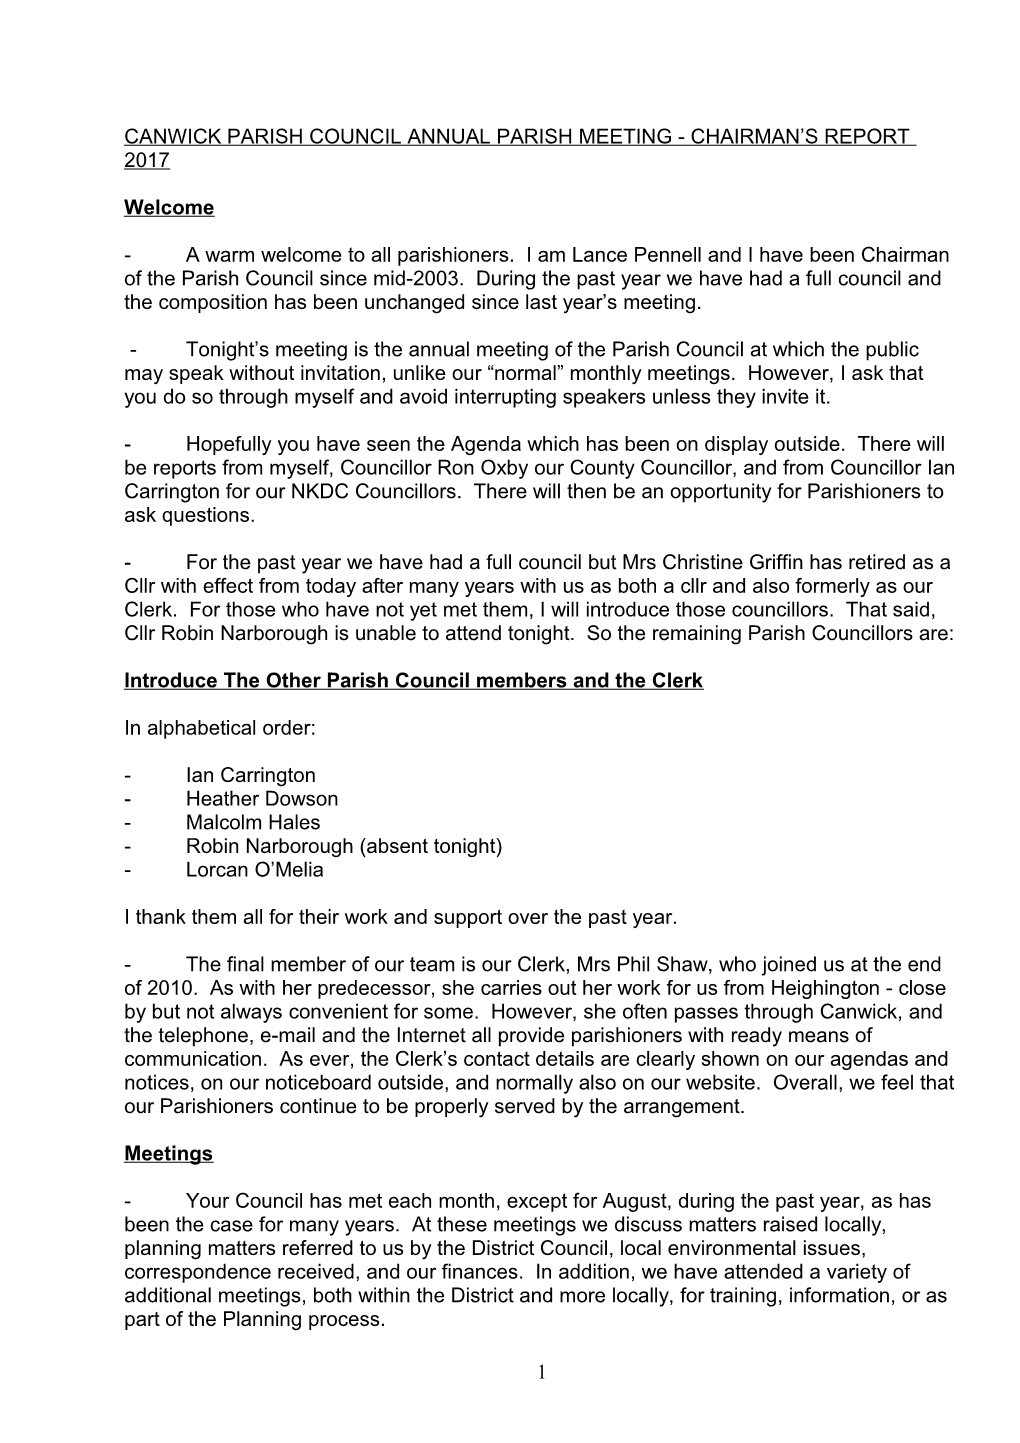 Canwick Parish Council Annual Parish Meeting - Chairman S Report 2005